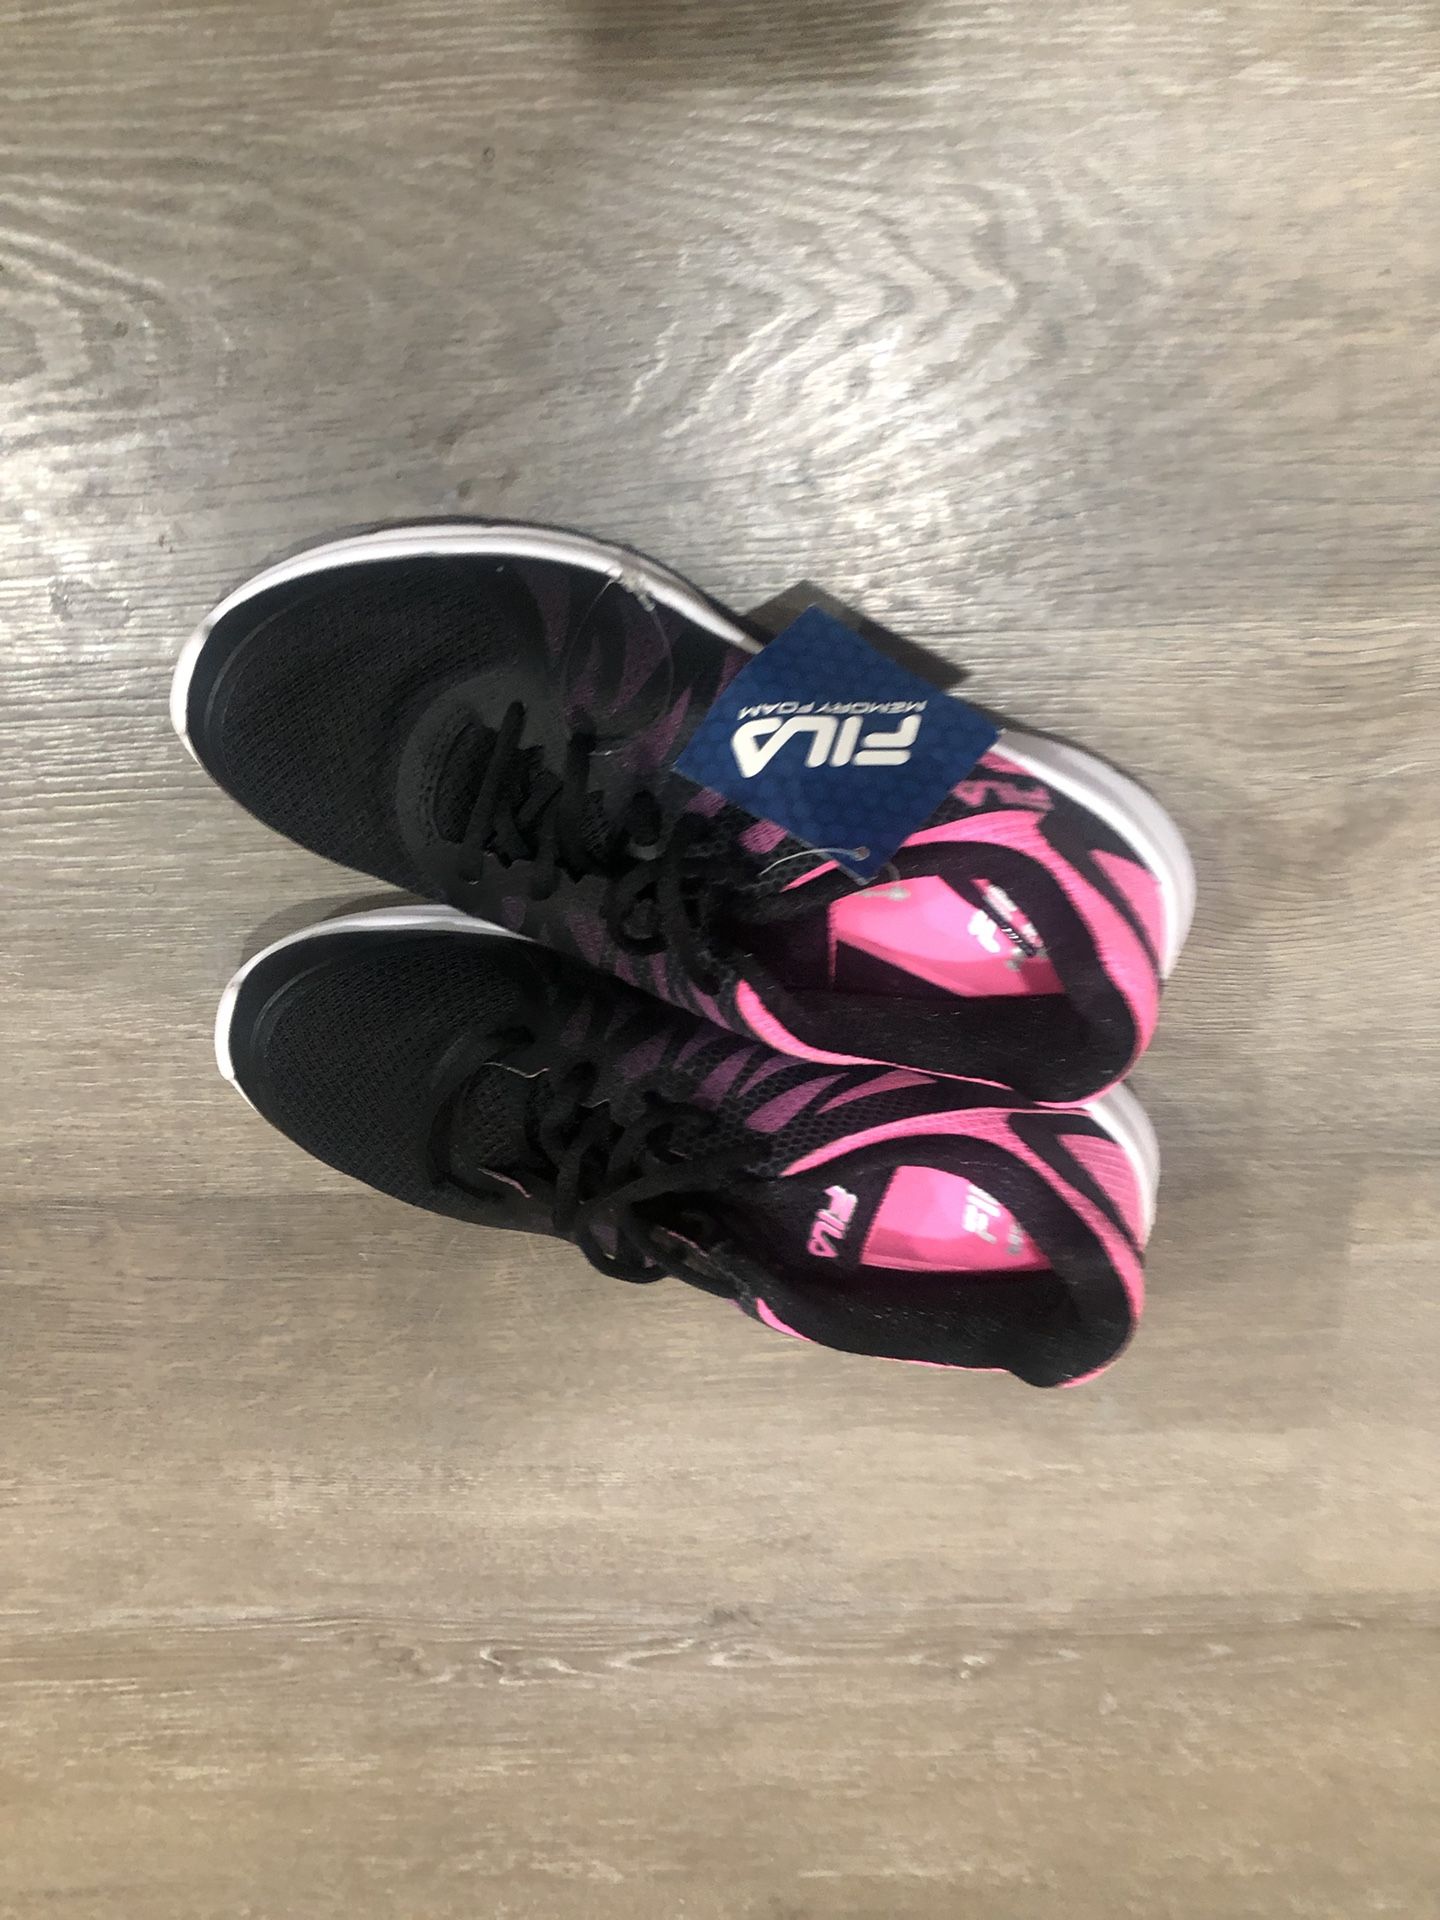 Women’s Fila Shoes Size 10